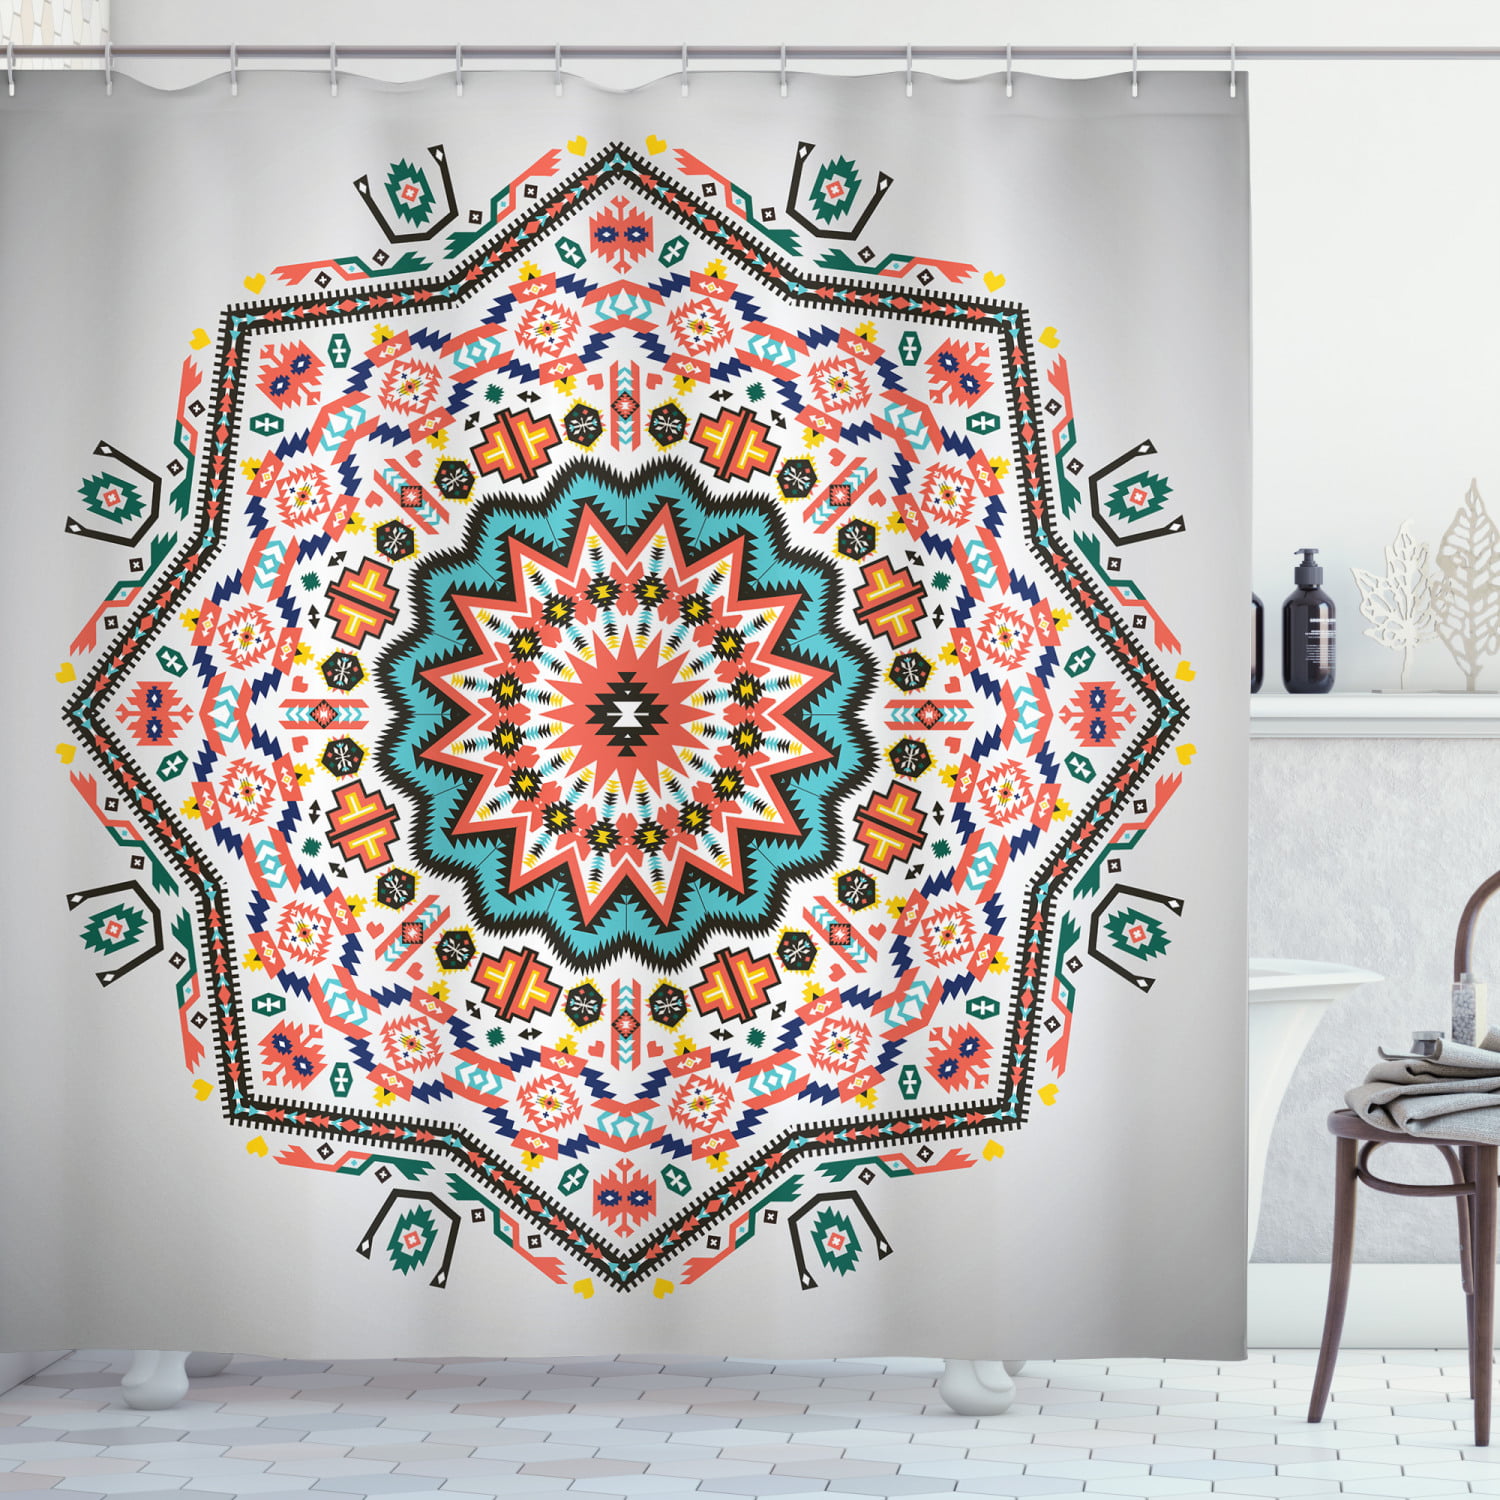 The Zodiac Theme Waterproof Fabric Home Decor Shower Curtain Bathroom Mat 